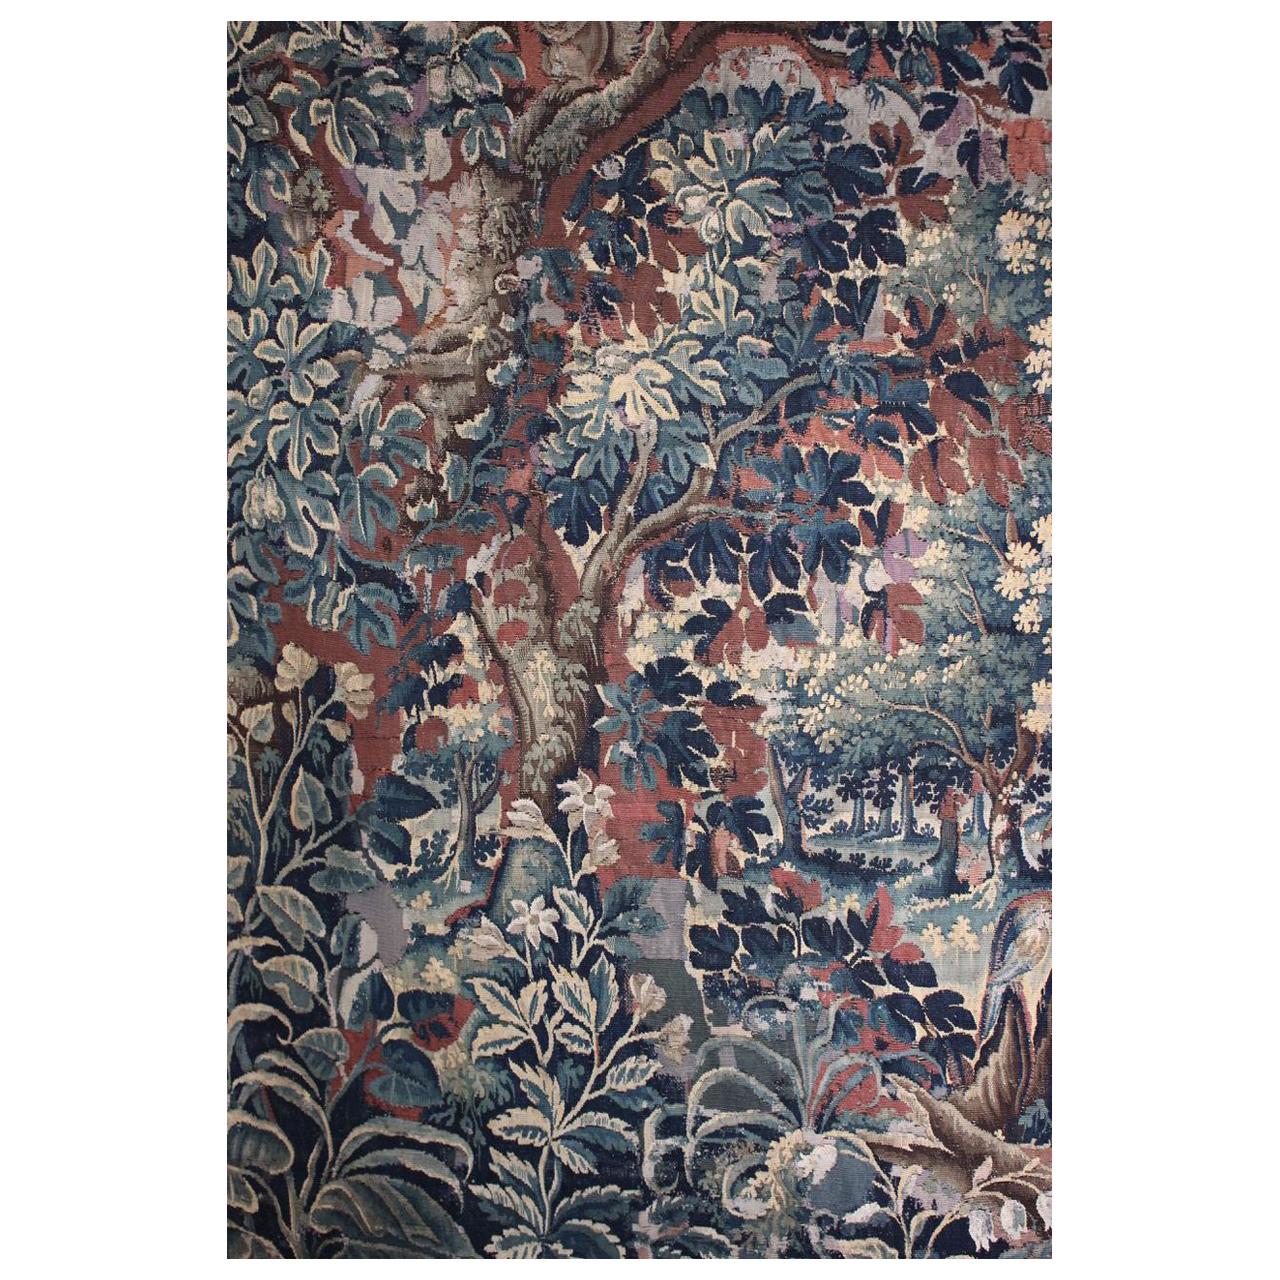 Late 18th Century Flemish Verdure Tapestry Fragment